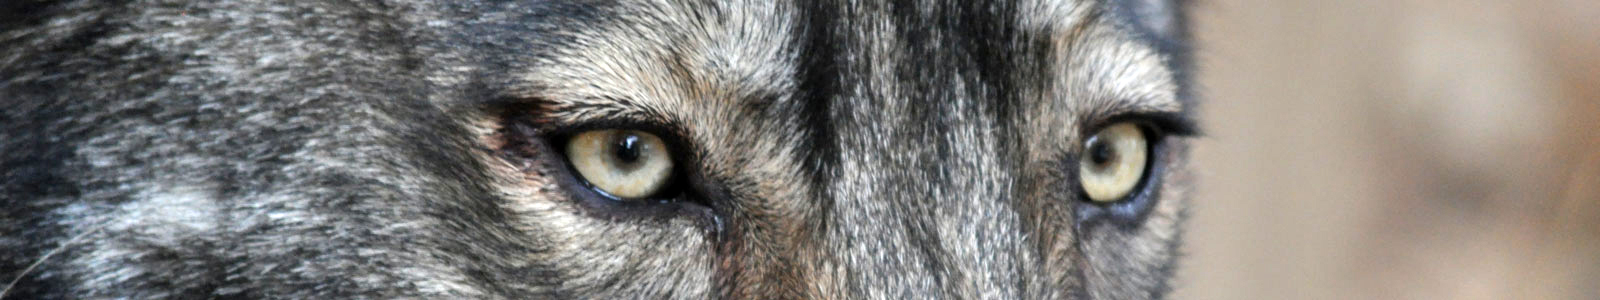 Texas Wolfdog Project Alvin Kneisler Header Image